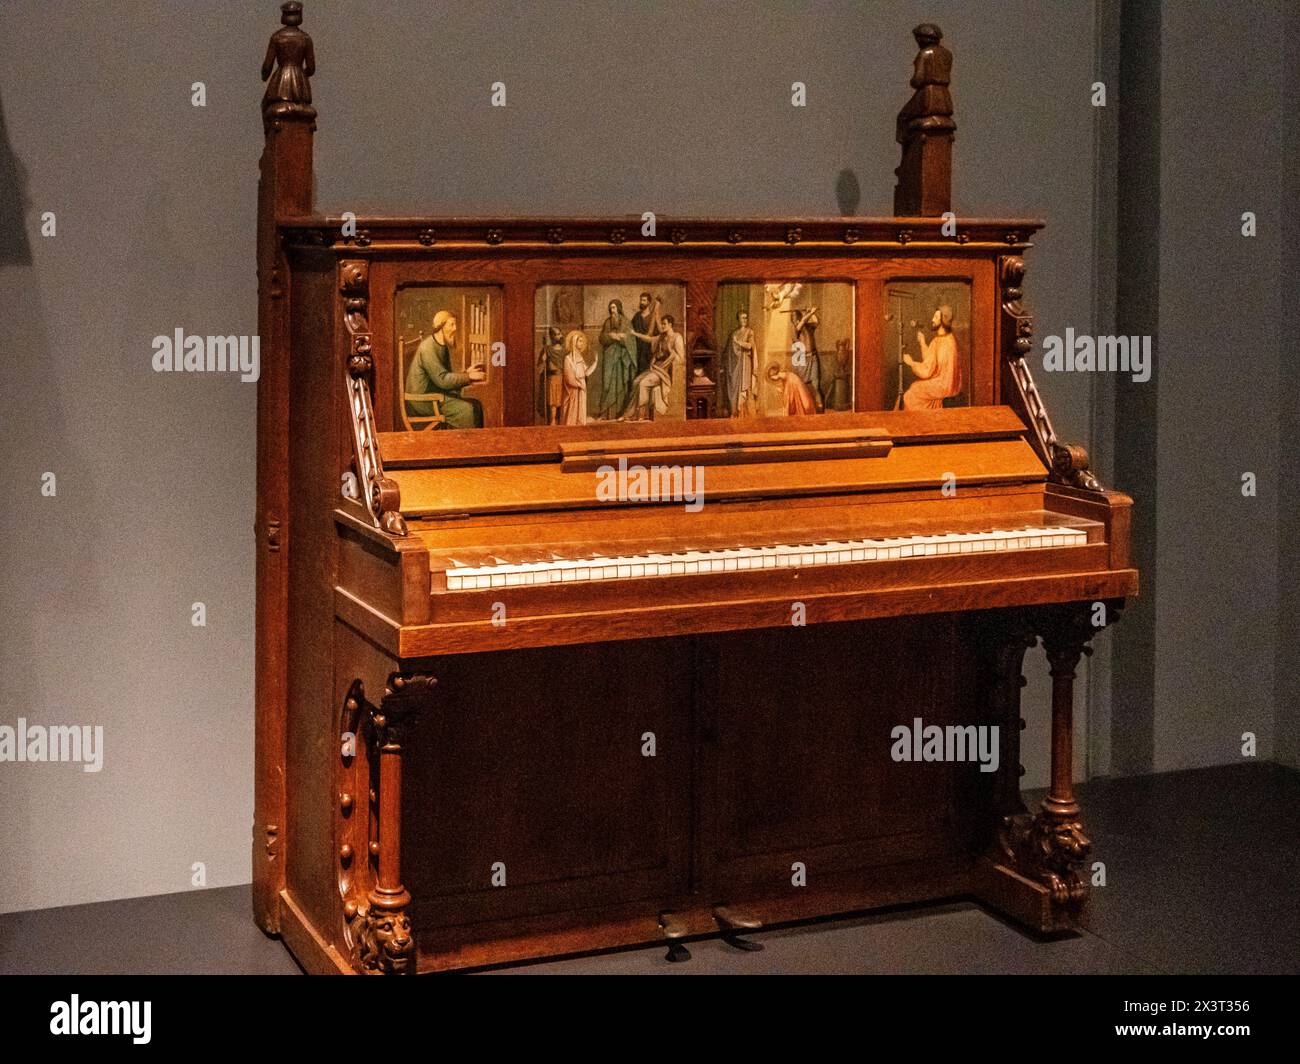 Piano du XIXe siècle, Atelier Cuypers, Amsterdam, pays-Bas Banque D'Images